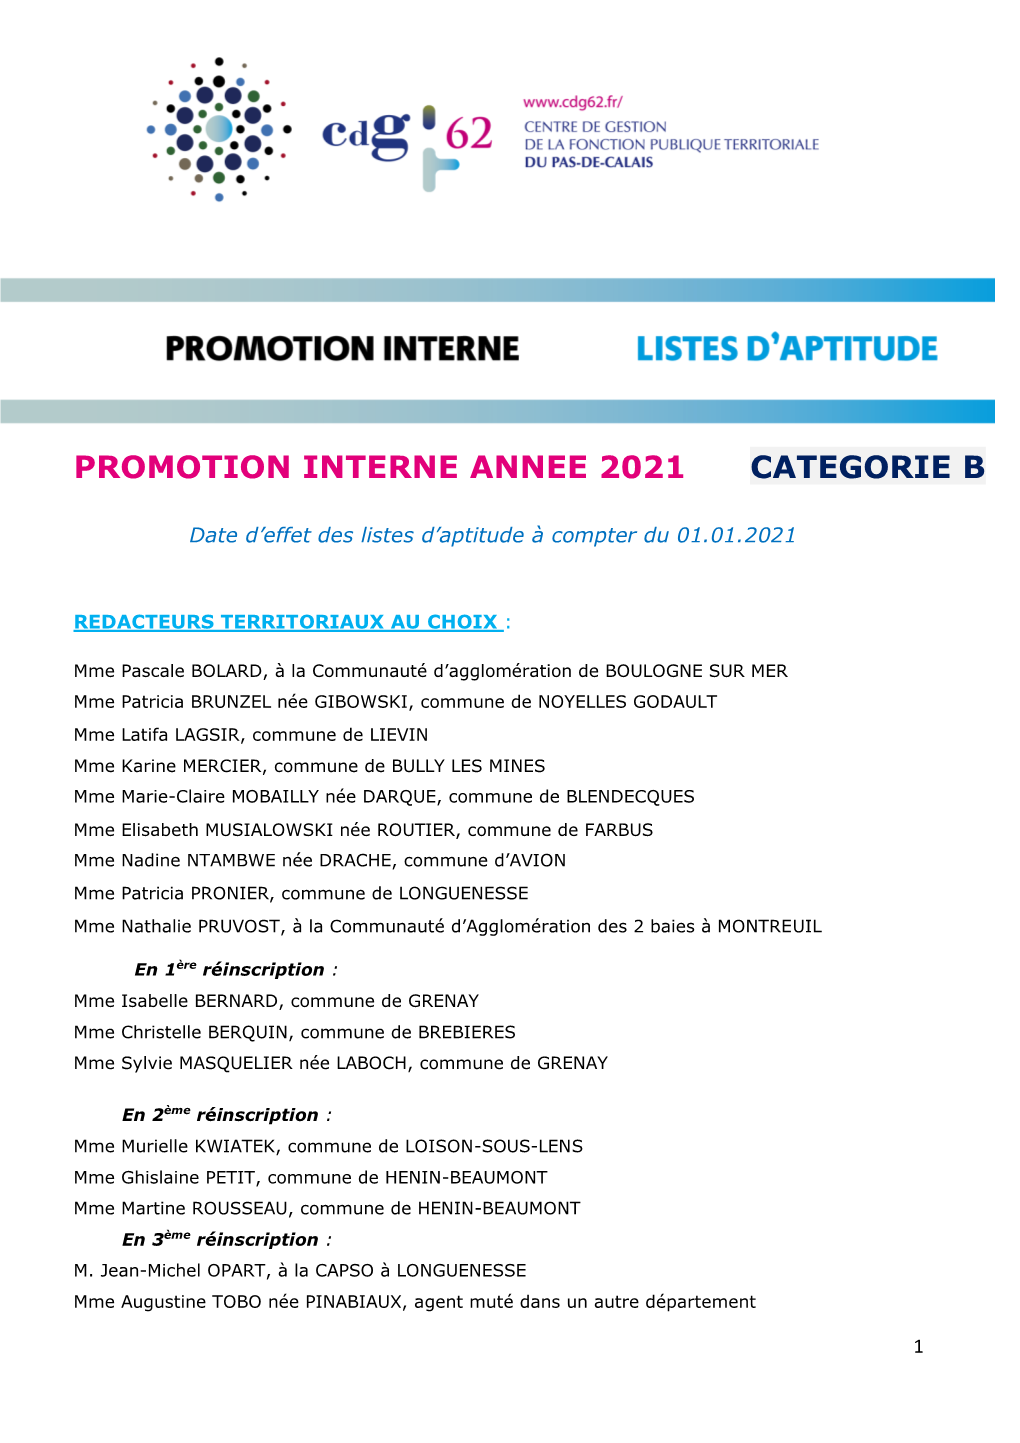 Promotion Interne Annee 2021 Categorie B